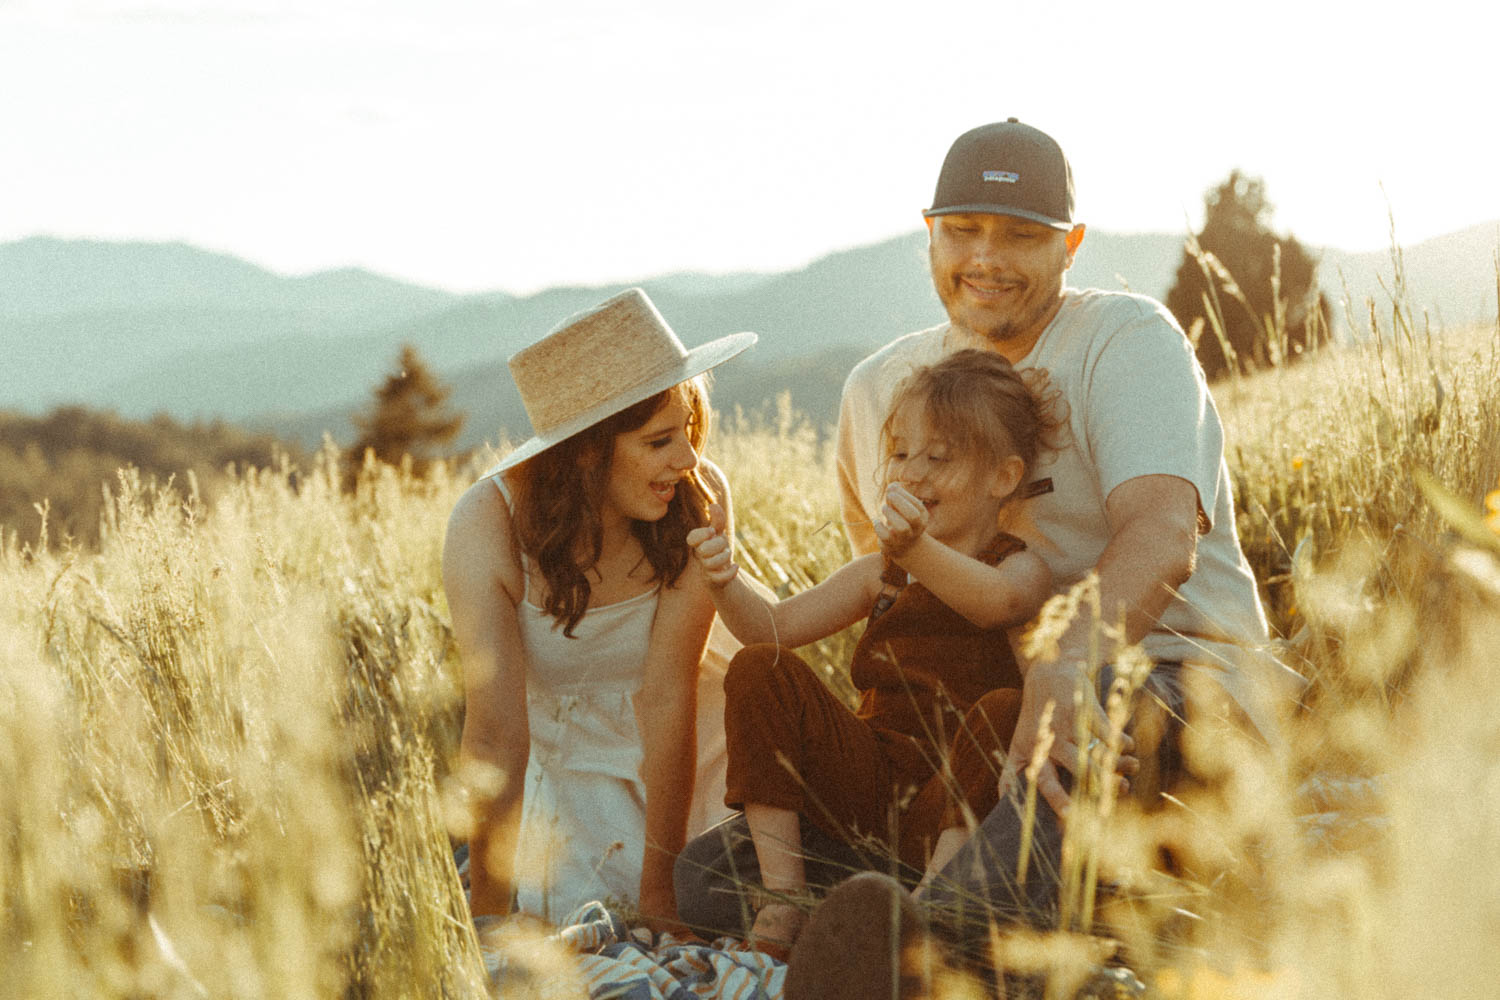 Idaho mountain family photos